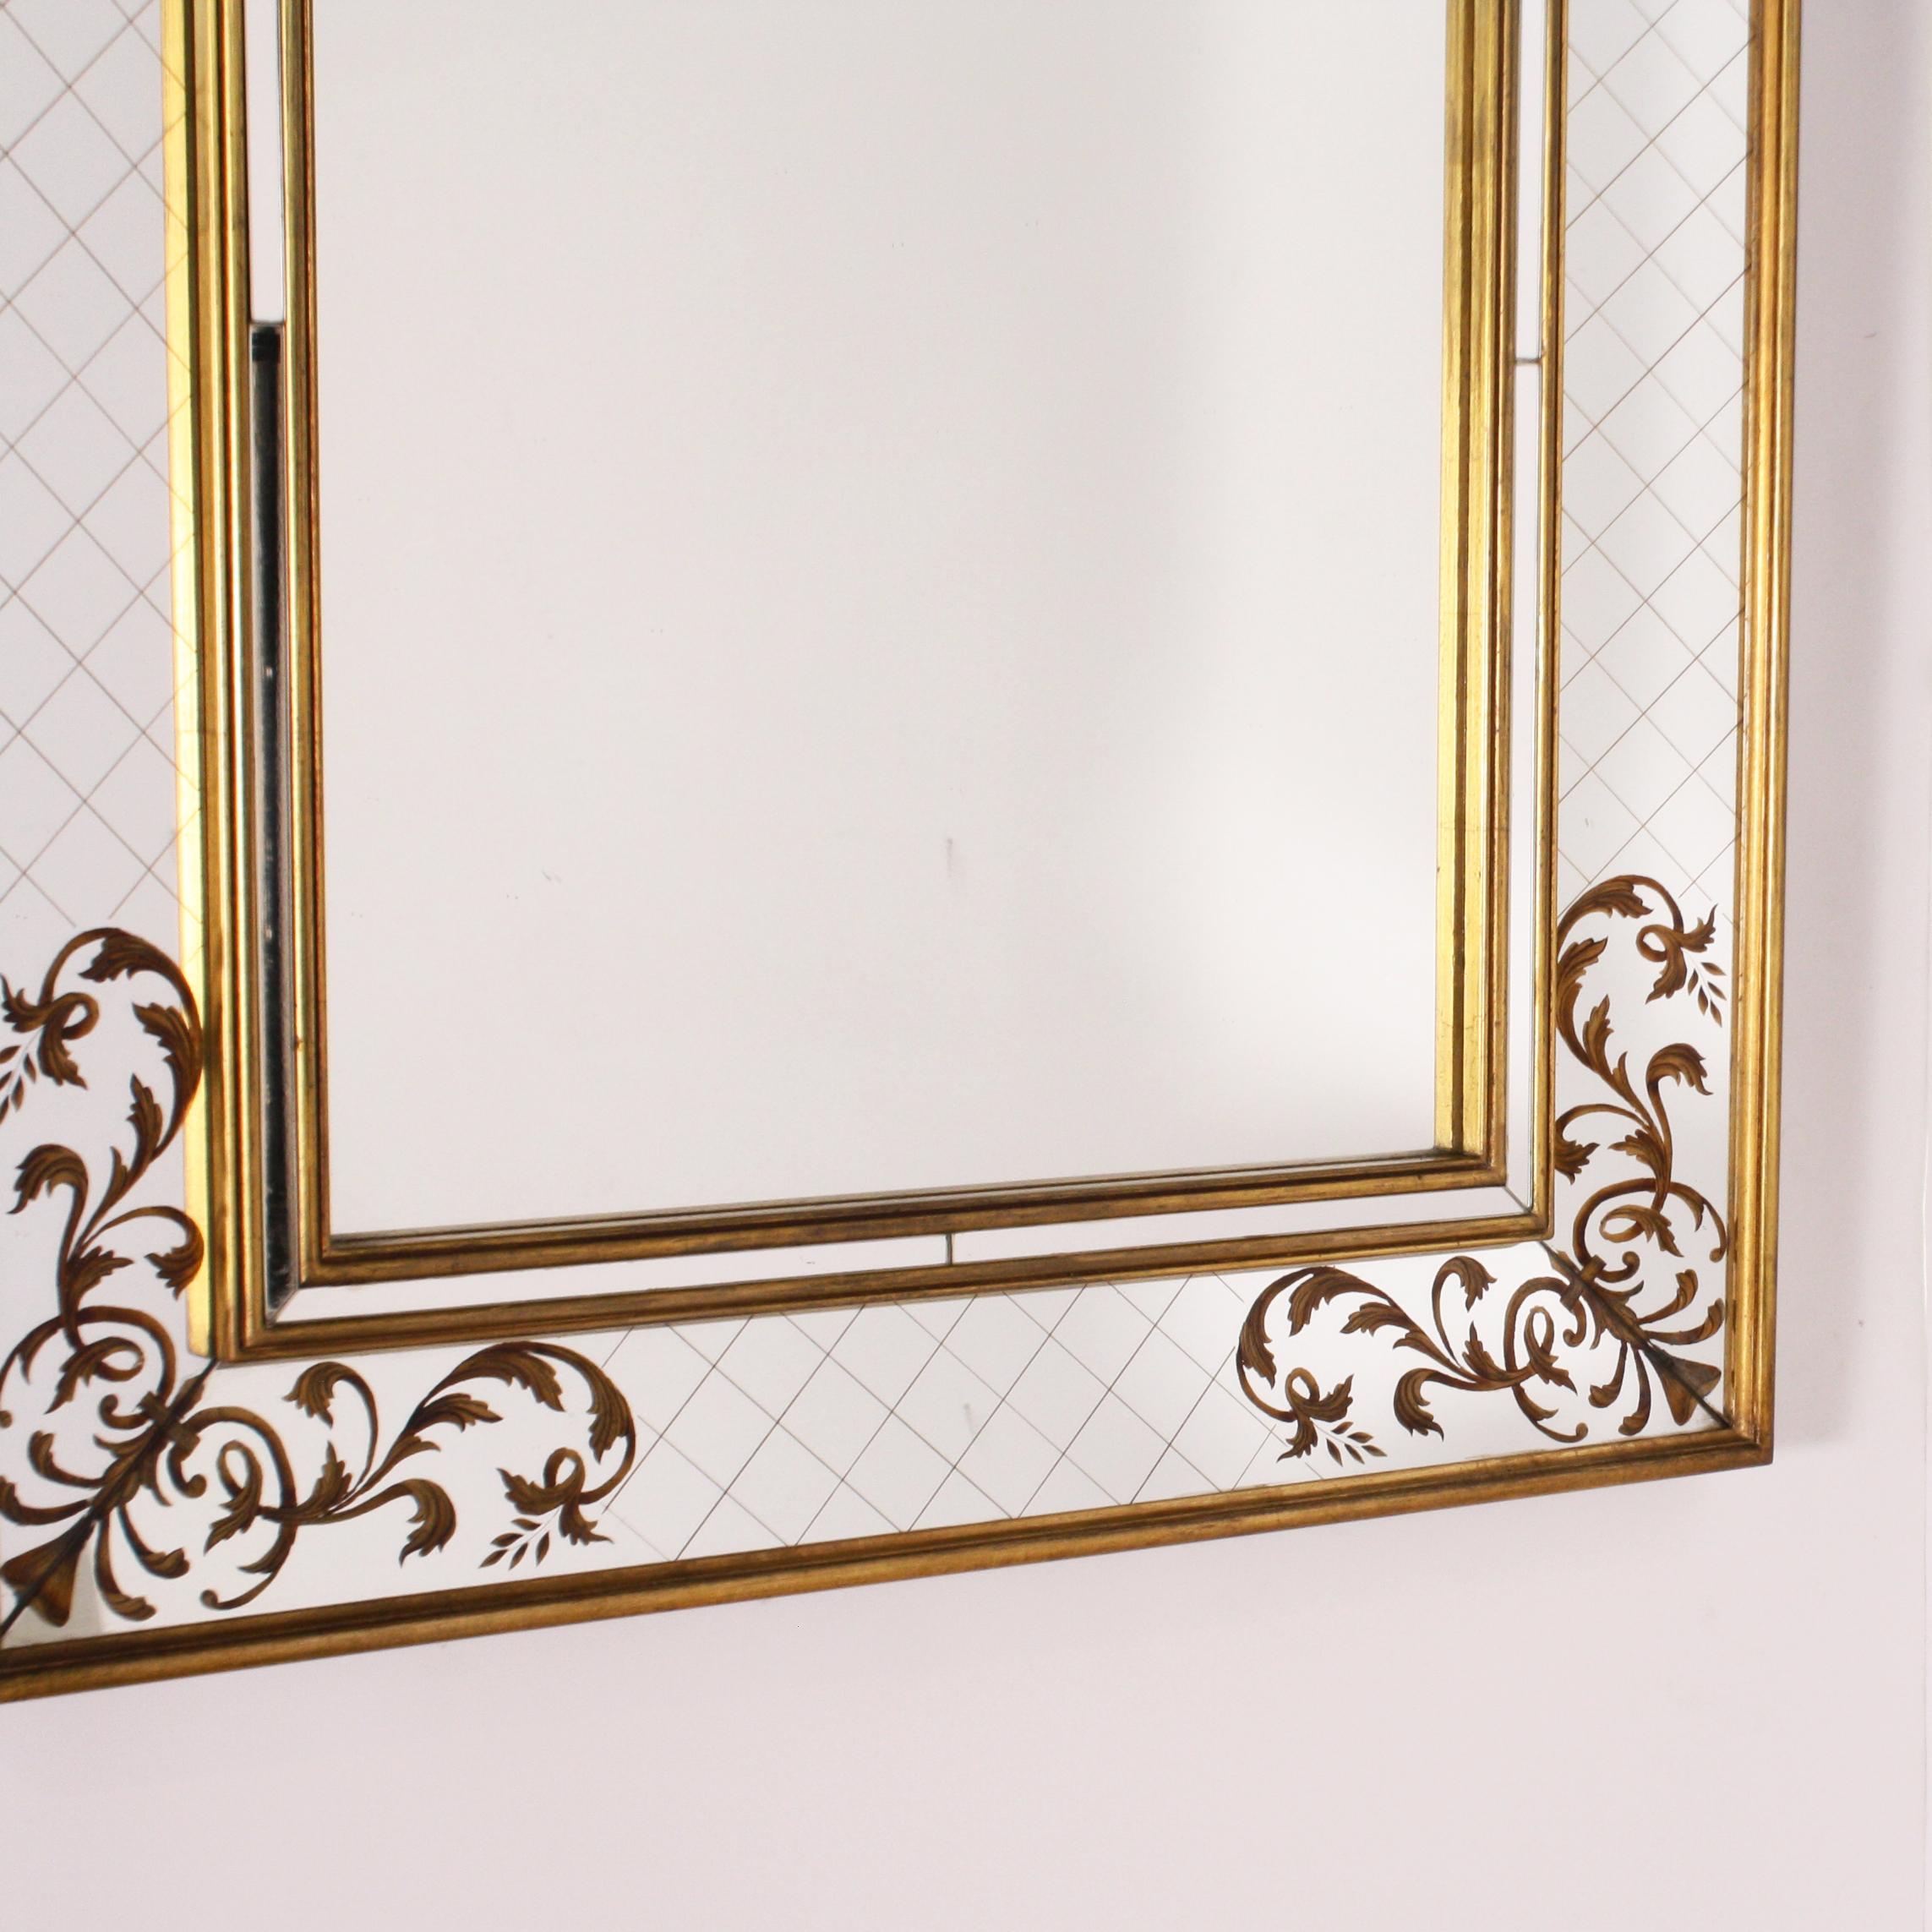 French gold leaf églomisé mirror with gold wood frame, circa 1940.